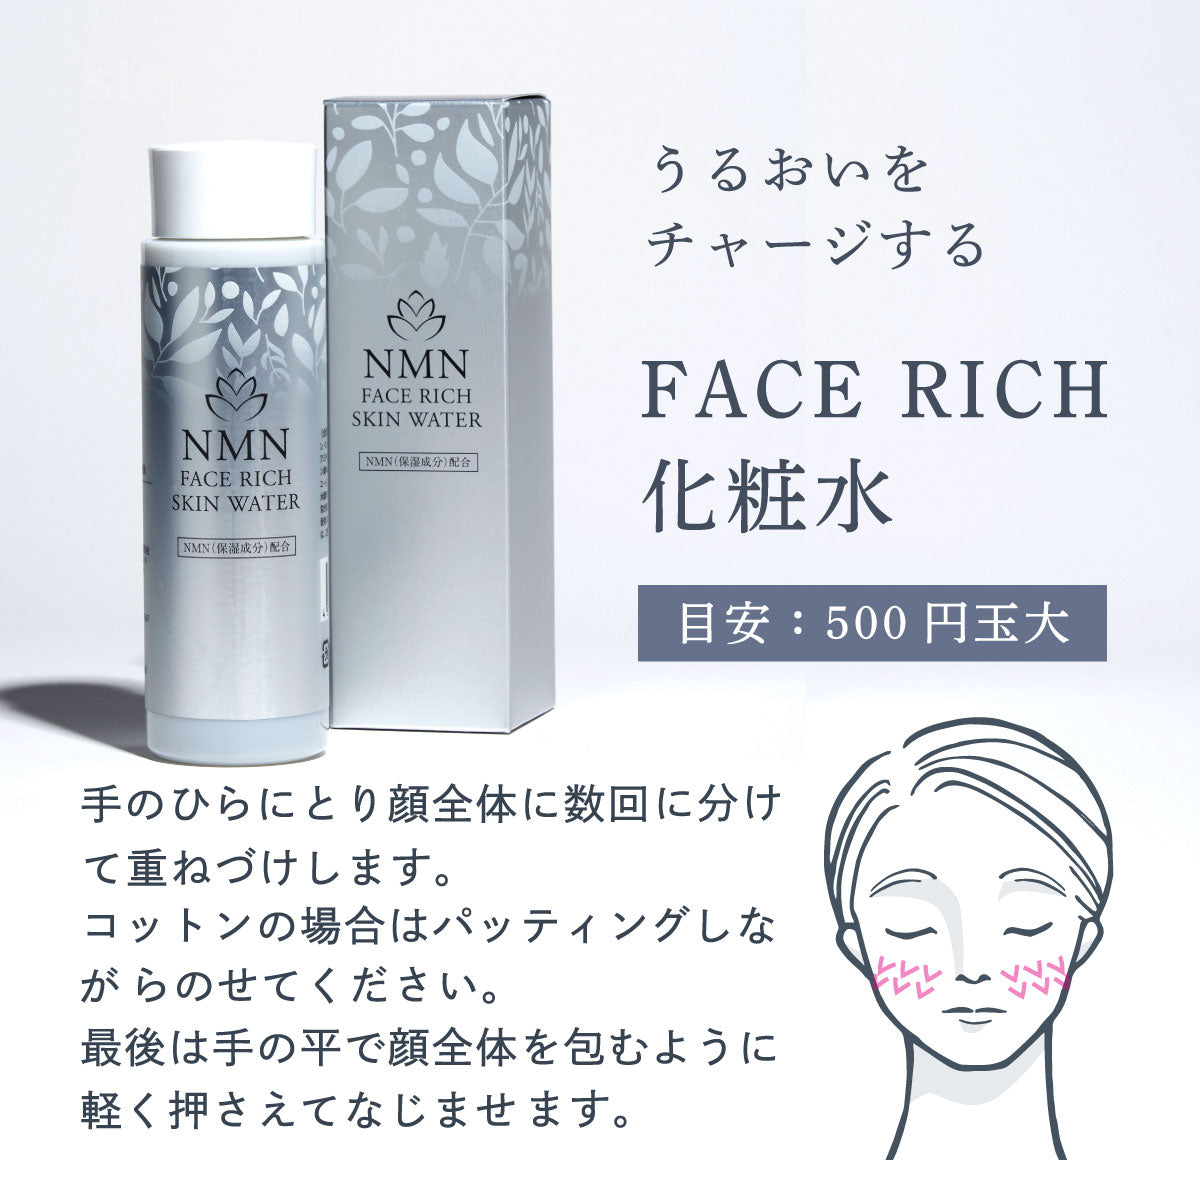 Face Rich Skin Water